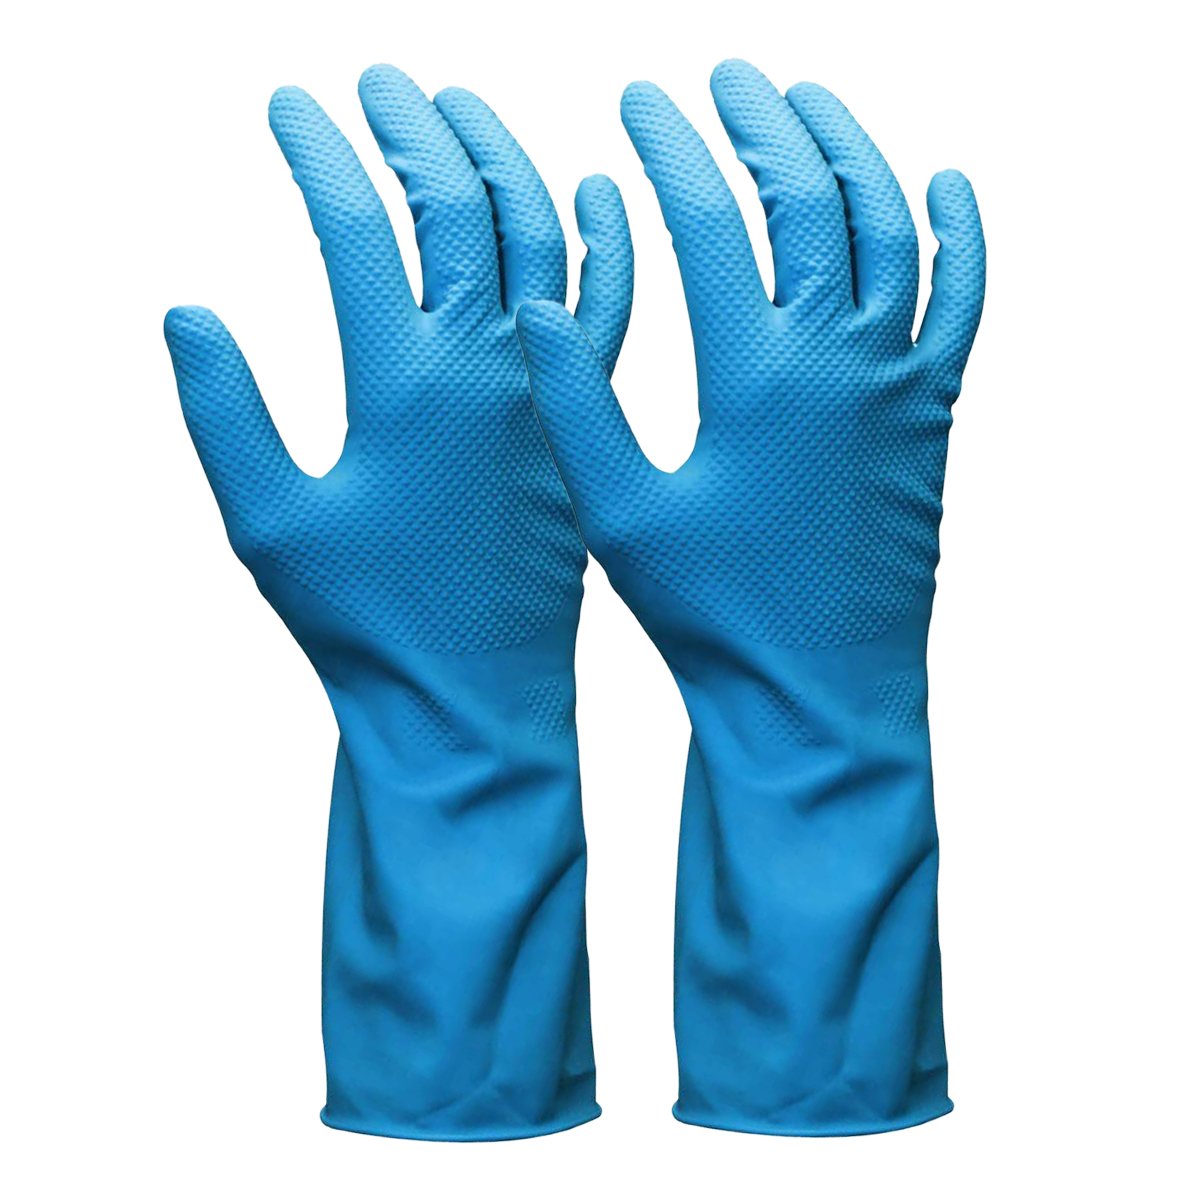 Durelle Premium Ambidextrous Blue Silver Lined Gloves - Medium Size 8 (50/pack)